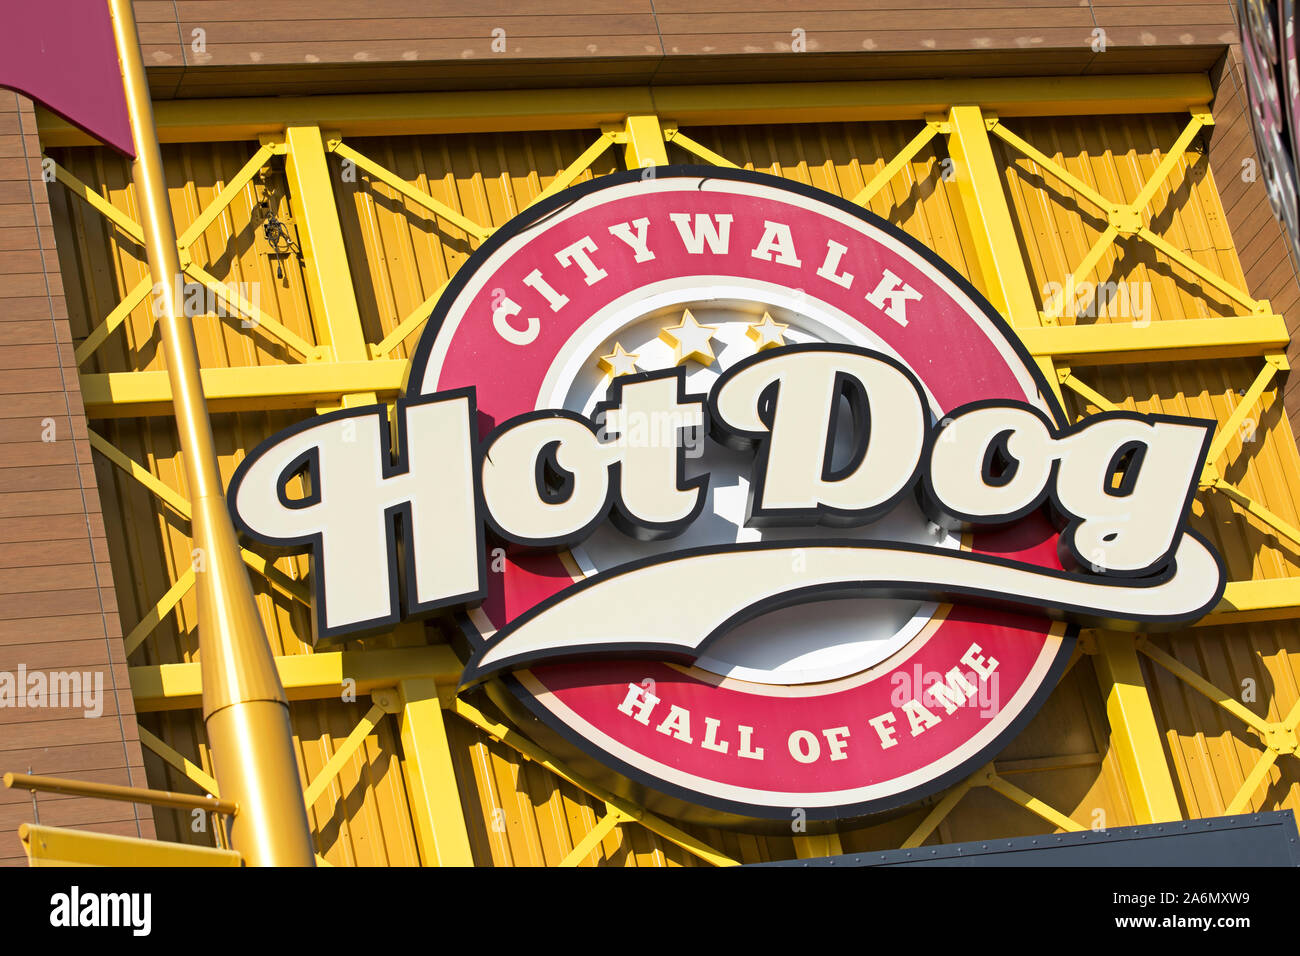 CityWalk Hot Dog Hall of Fame segno, Baseball themed Eatery, ristorante, CityWalk, Universal Studios, Orlando, STATI UNITI D'AMERICA Foto Stock